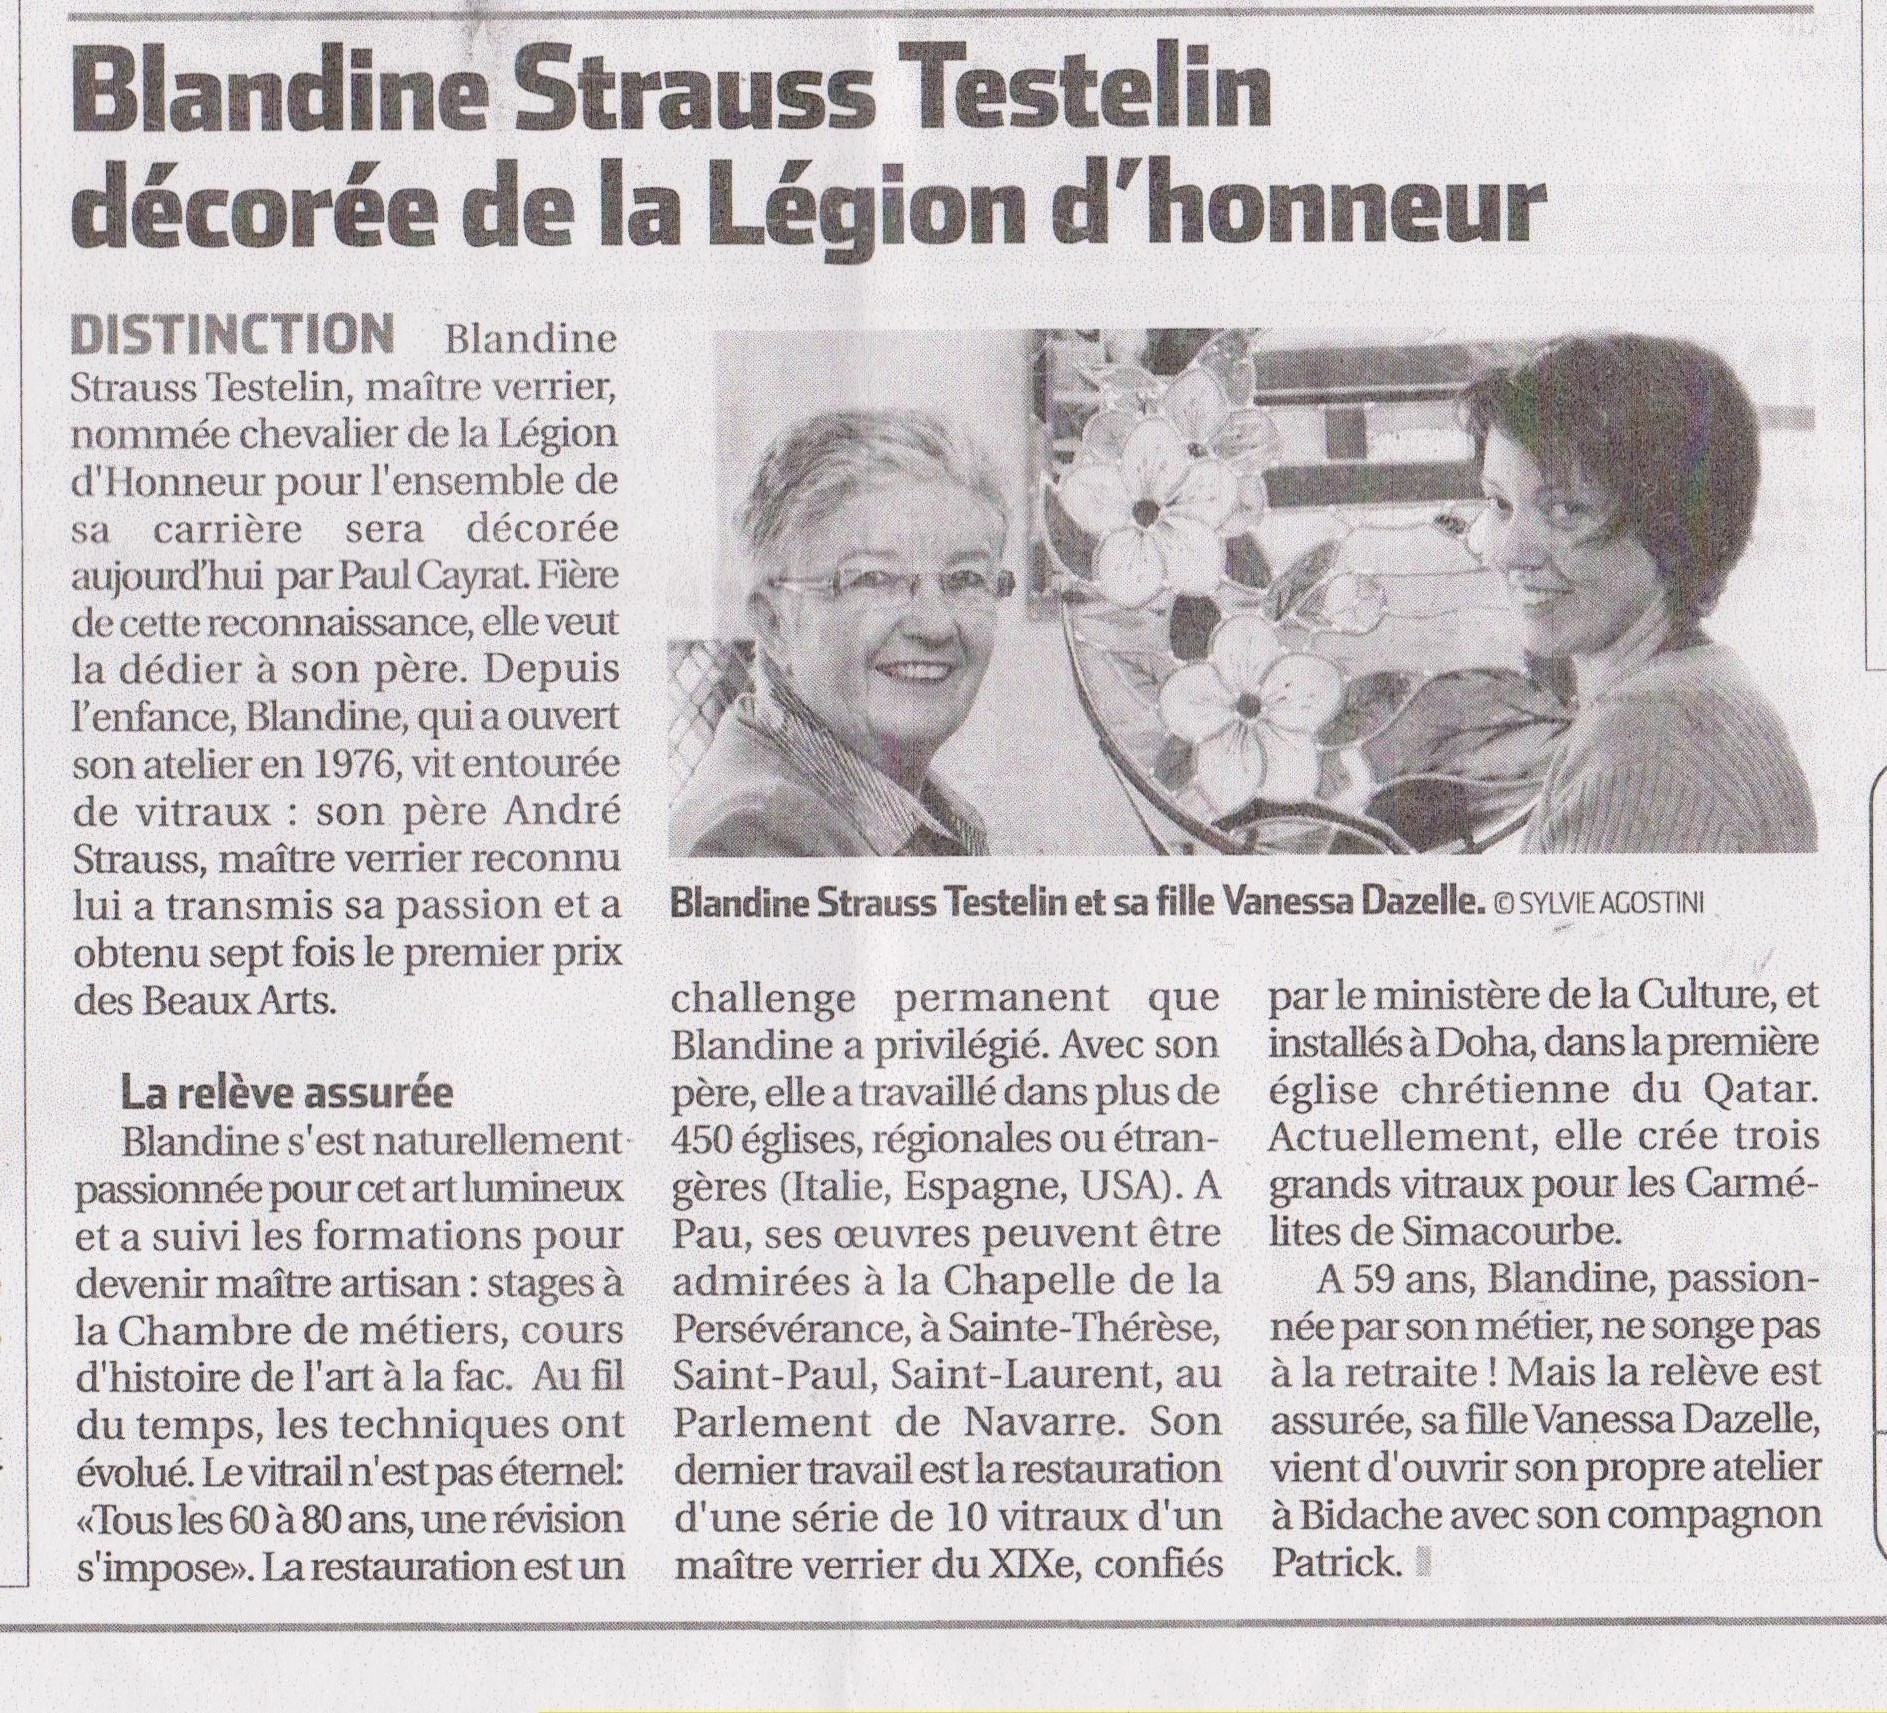 Blandine Strauss Testelin et sa fille Vanessa Dazelle